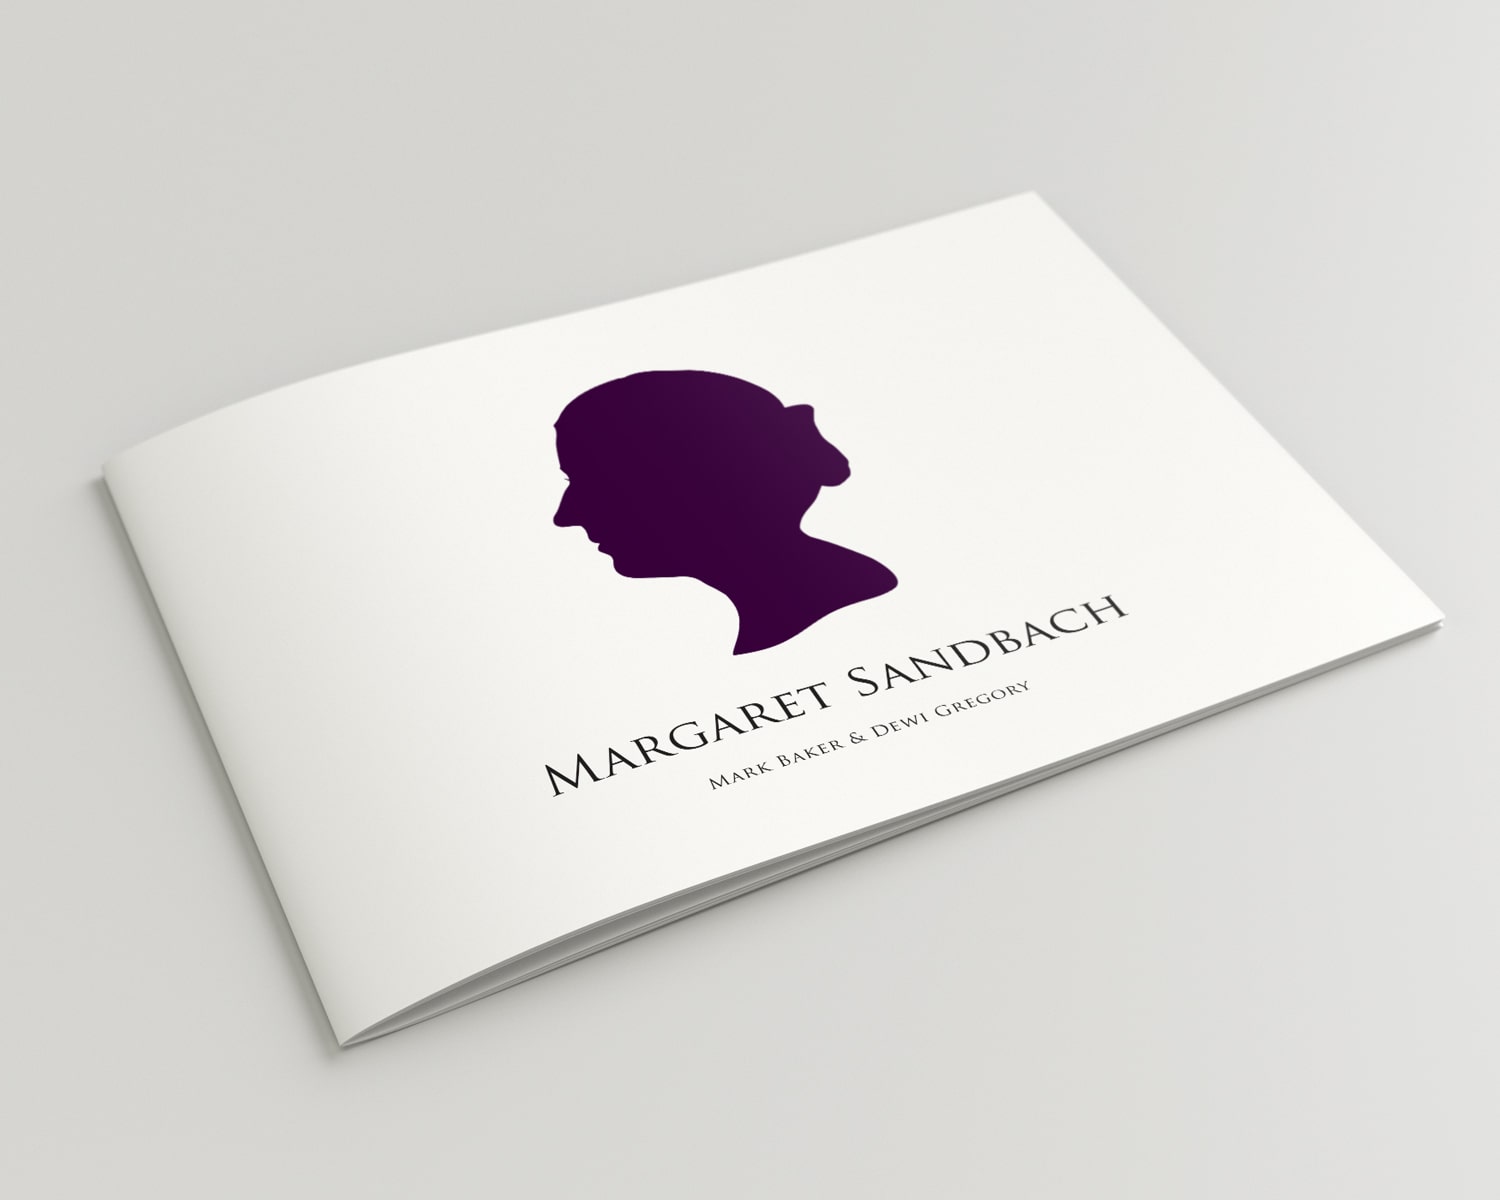 Margaret sandbach book 4